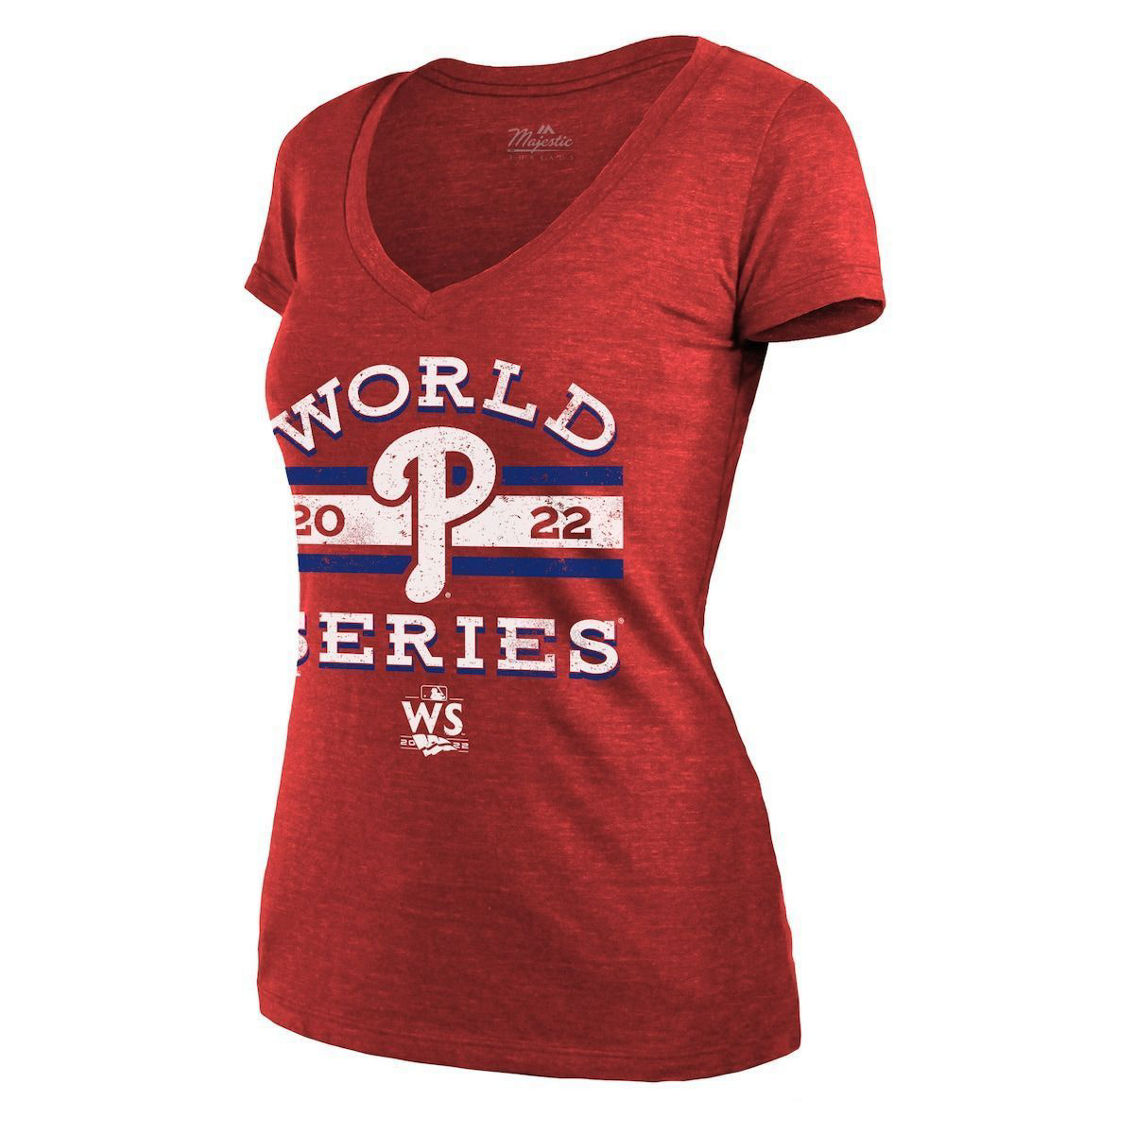 Majestic Threads Women's Threads Red Philadelphia Phillies 2022 World Series Modest V-Neck T-Shirt - Image 3 of 4